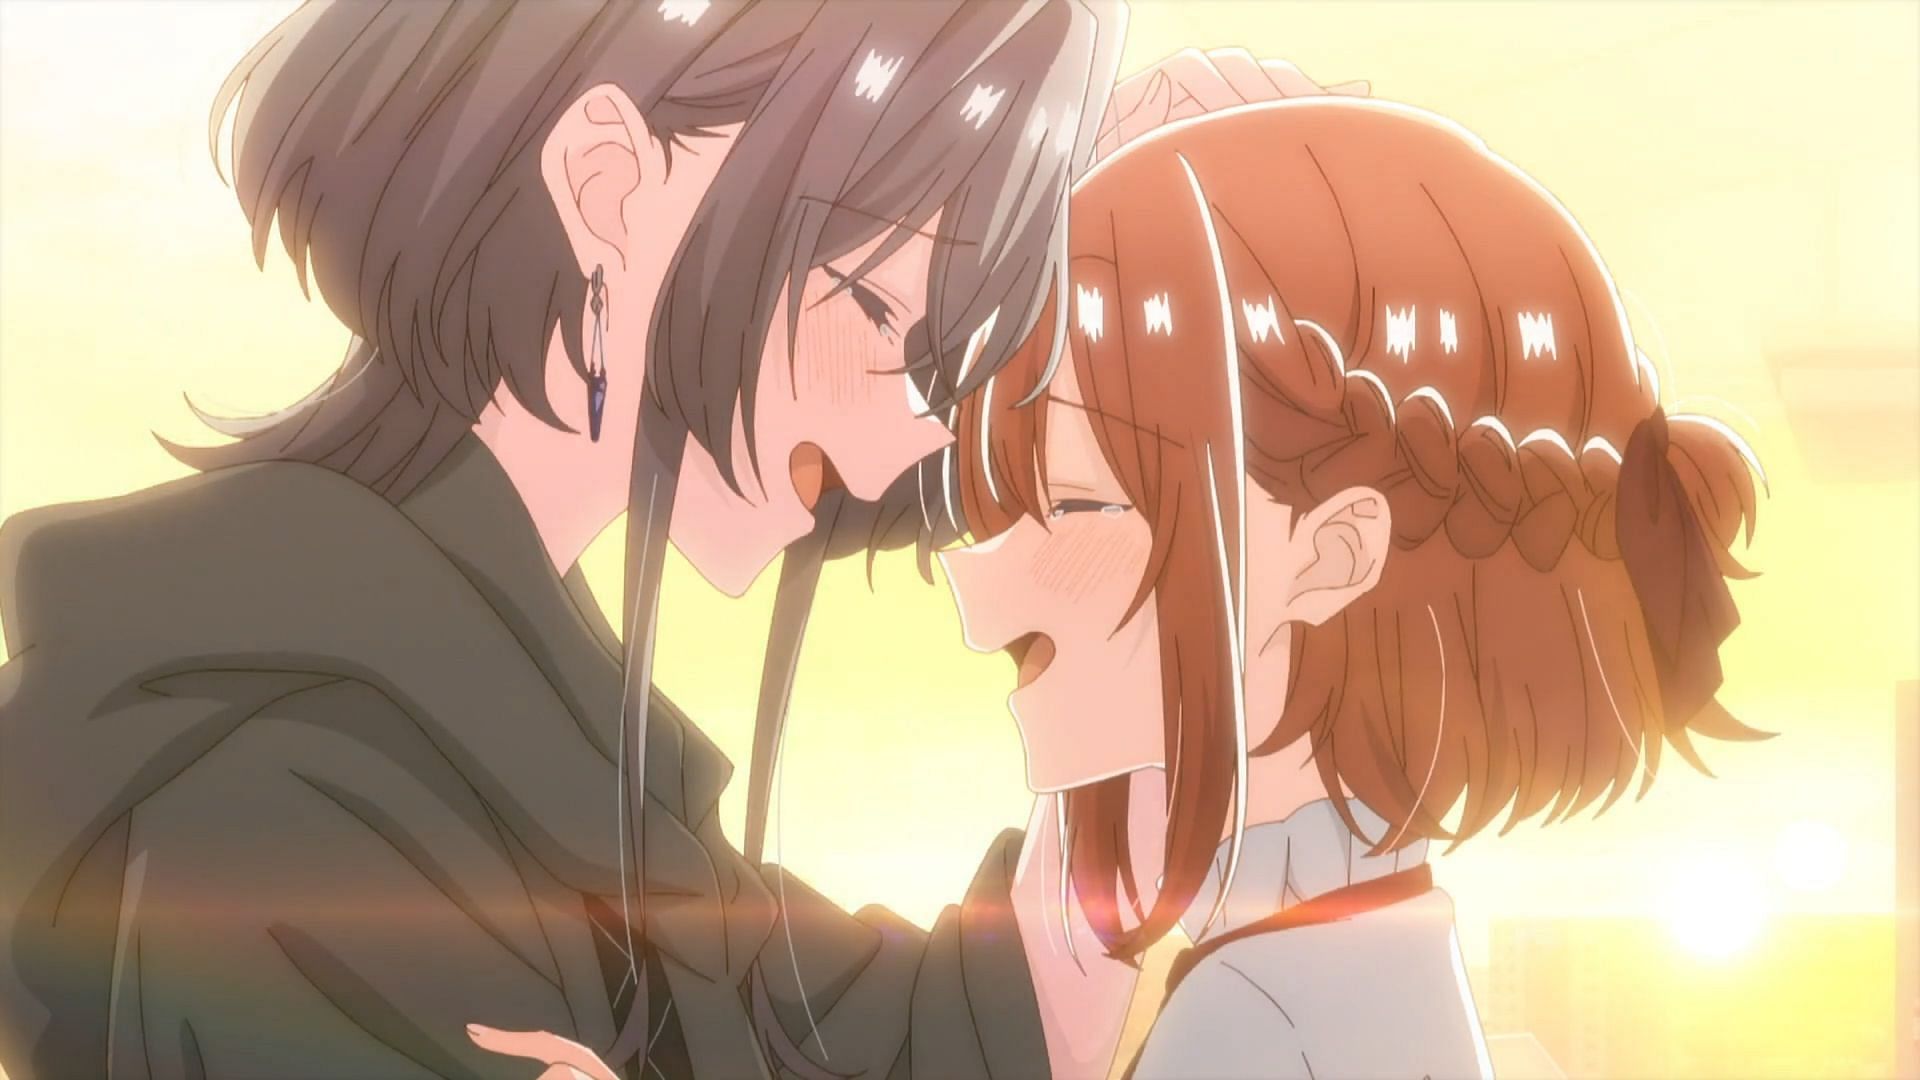 Yori and Hino, as seen in episode 6 (Image via Yokohama Animation Studio/Cloud Hearts)